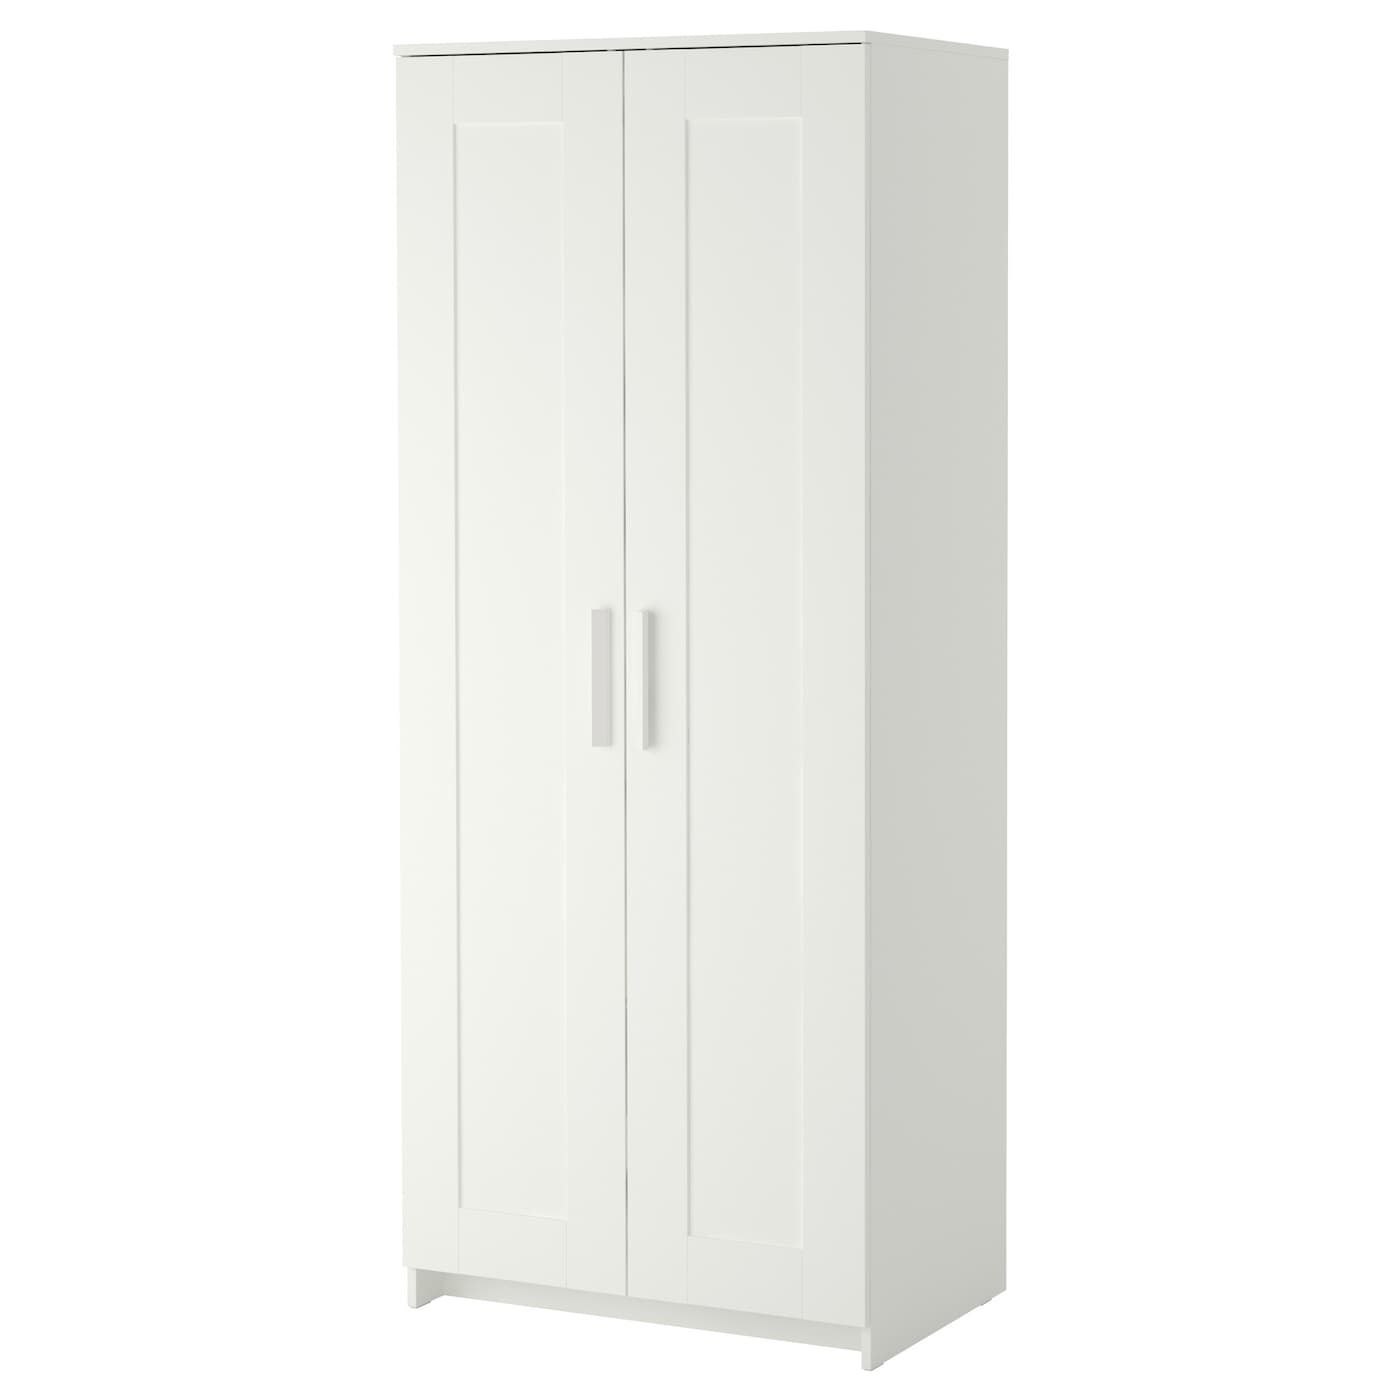 Brimnes White, Wardrobe With 2 Doors, 78x190 Cm – Ikea Throughout White Double Wardrobes (View 15 of 15)